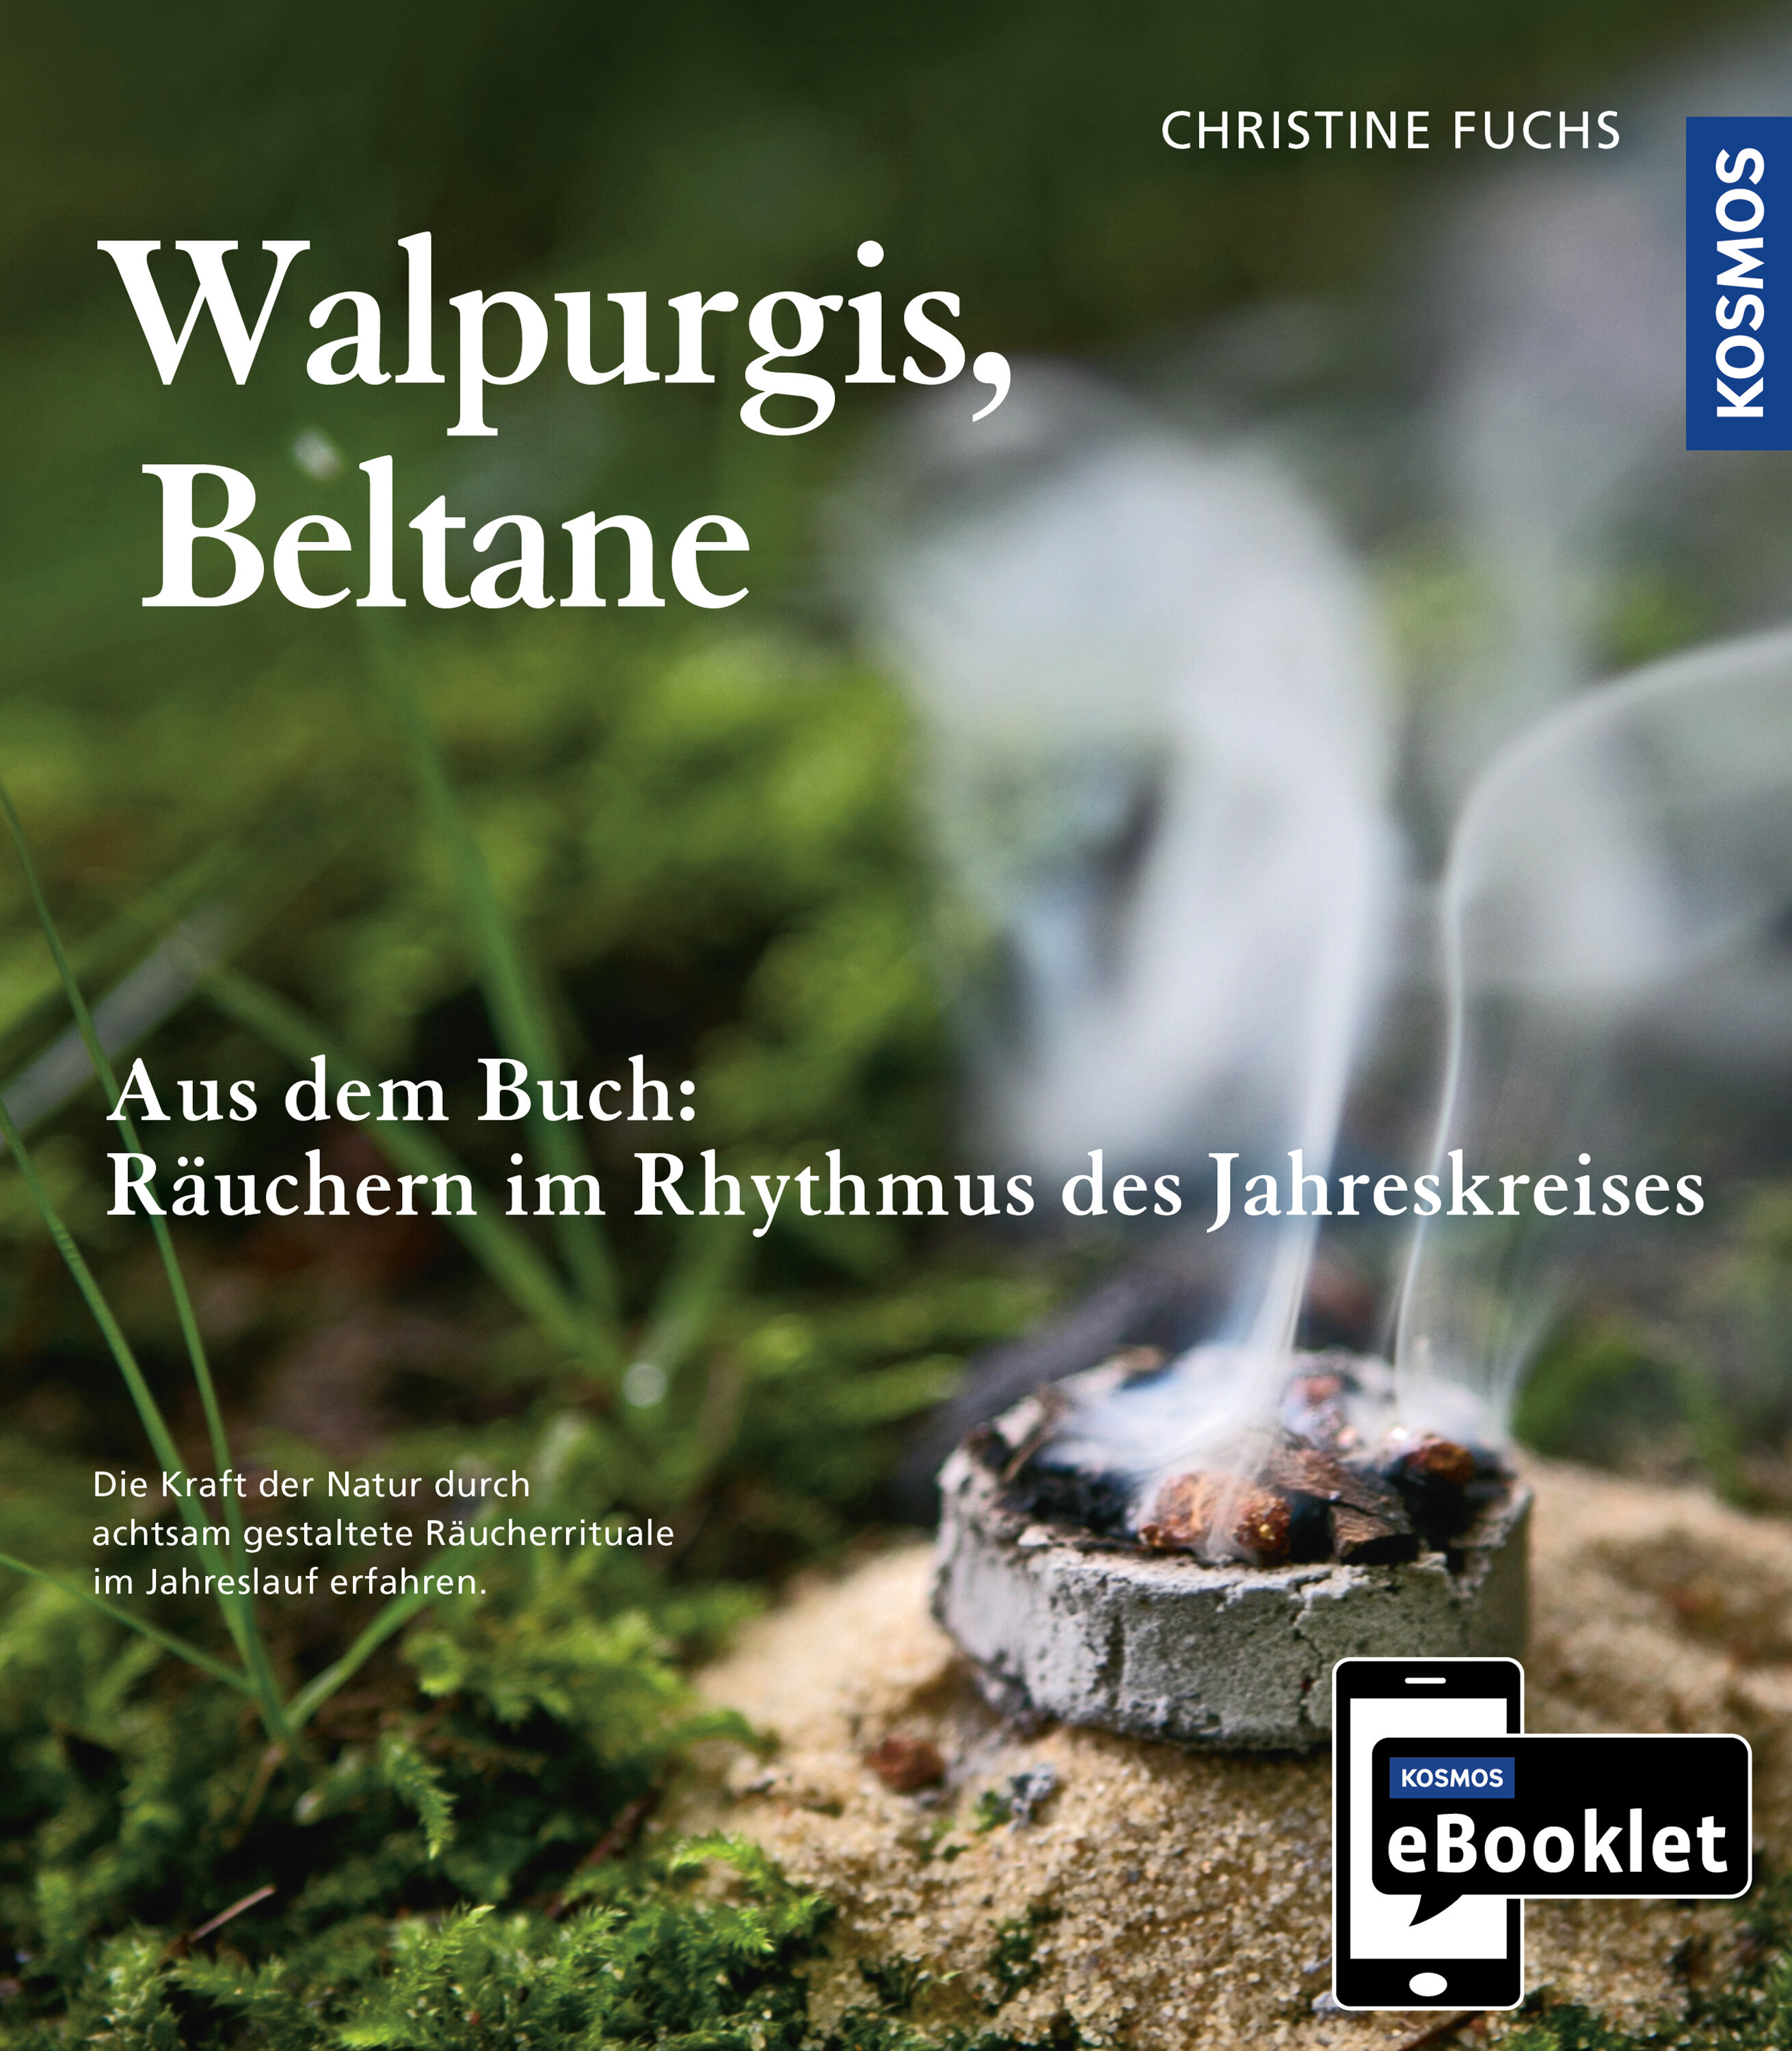 KOSMOS eBooklet: Walpurgis  Beltanea